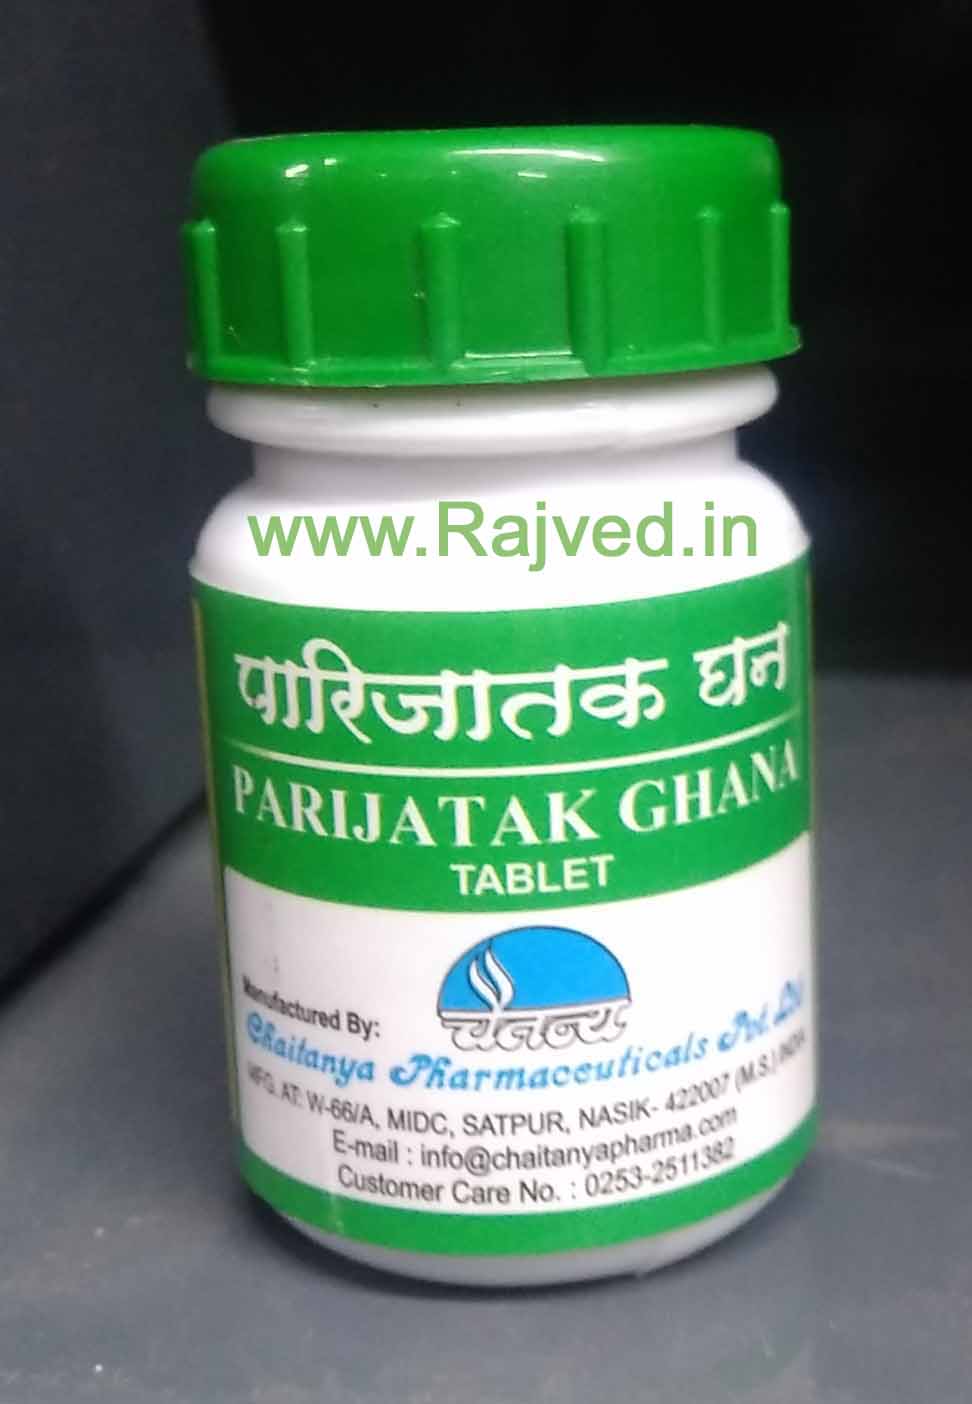 parijatak ghana 60 tab upto 20% off chaitanya pharmaceuticals